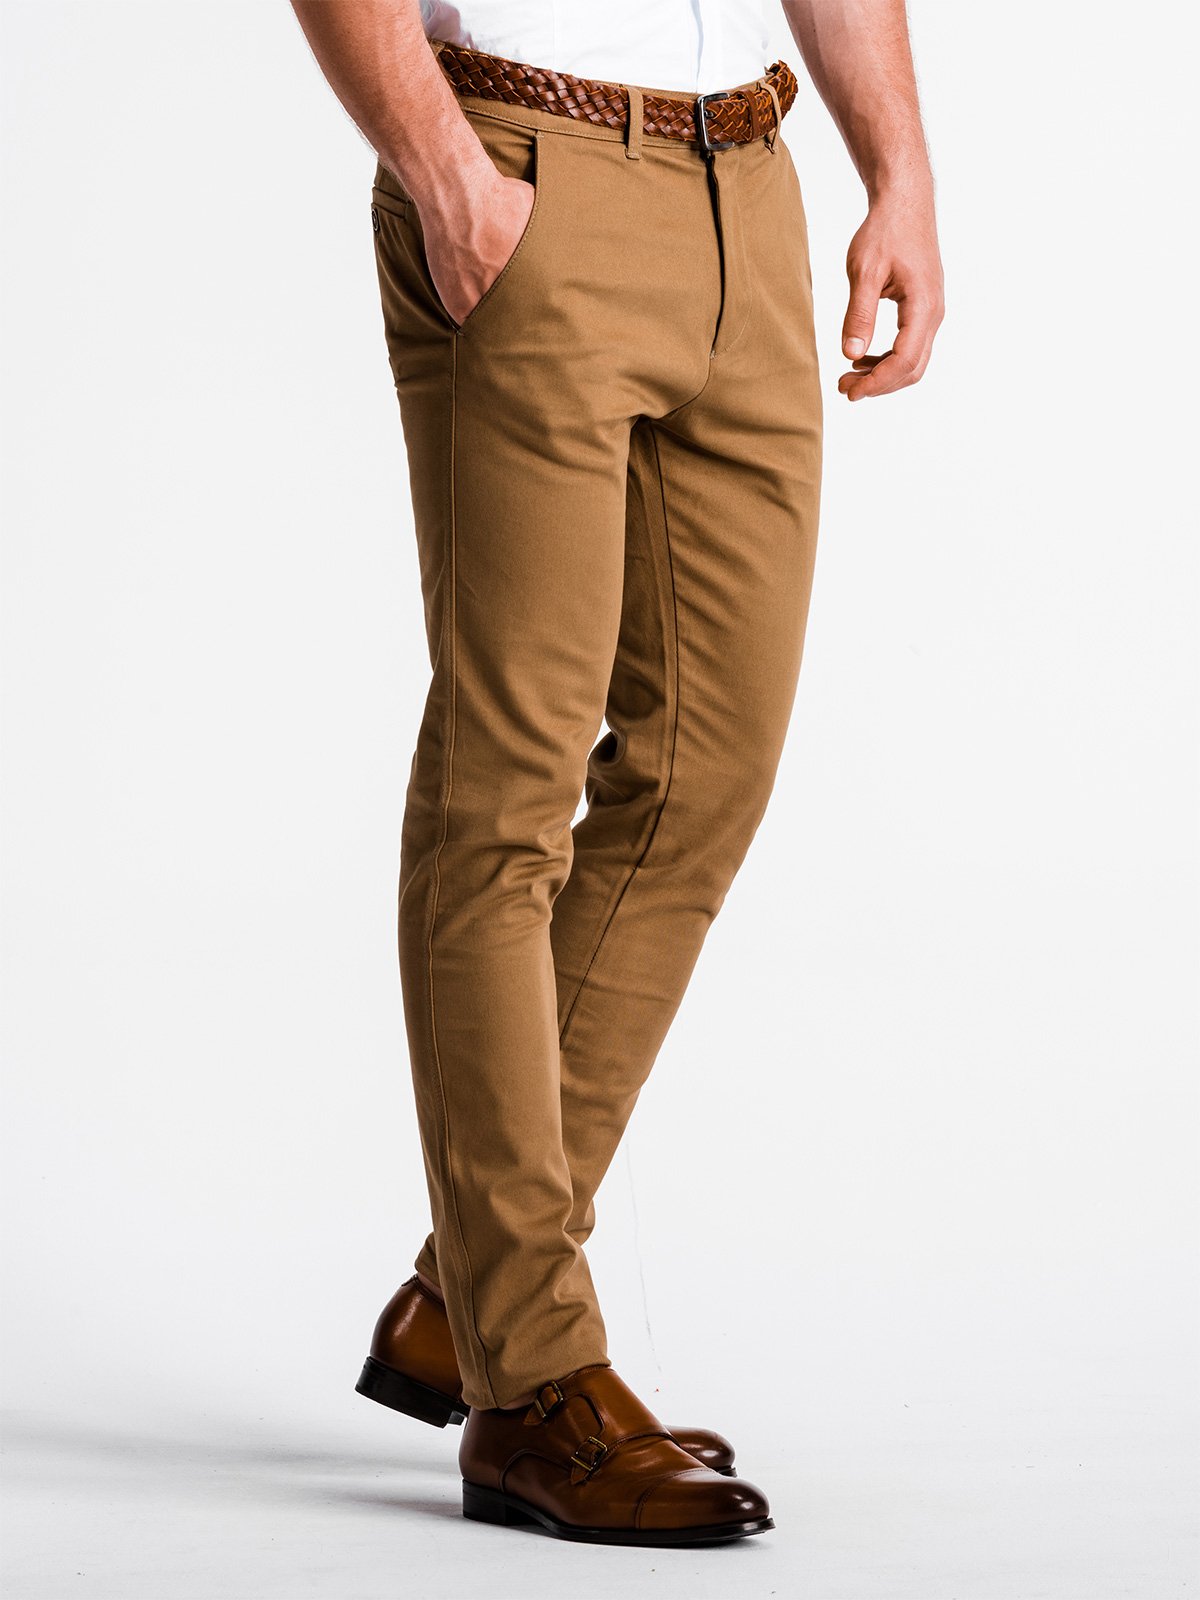 Buy AZOV WStallion Mens Slim Fit Dark Camel Color Trouser at Amazonin